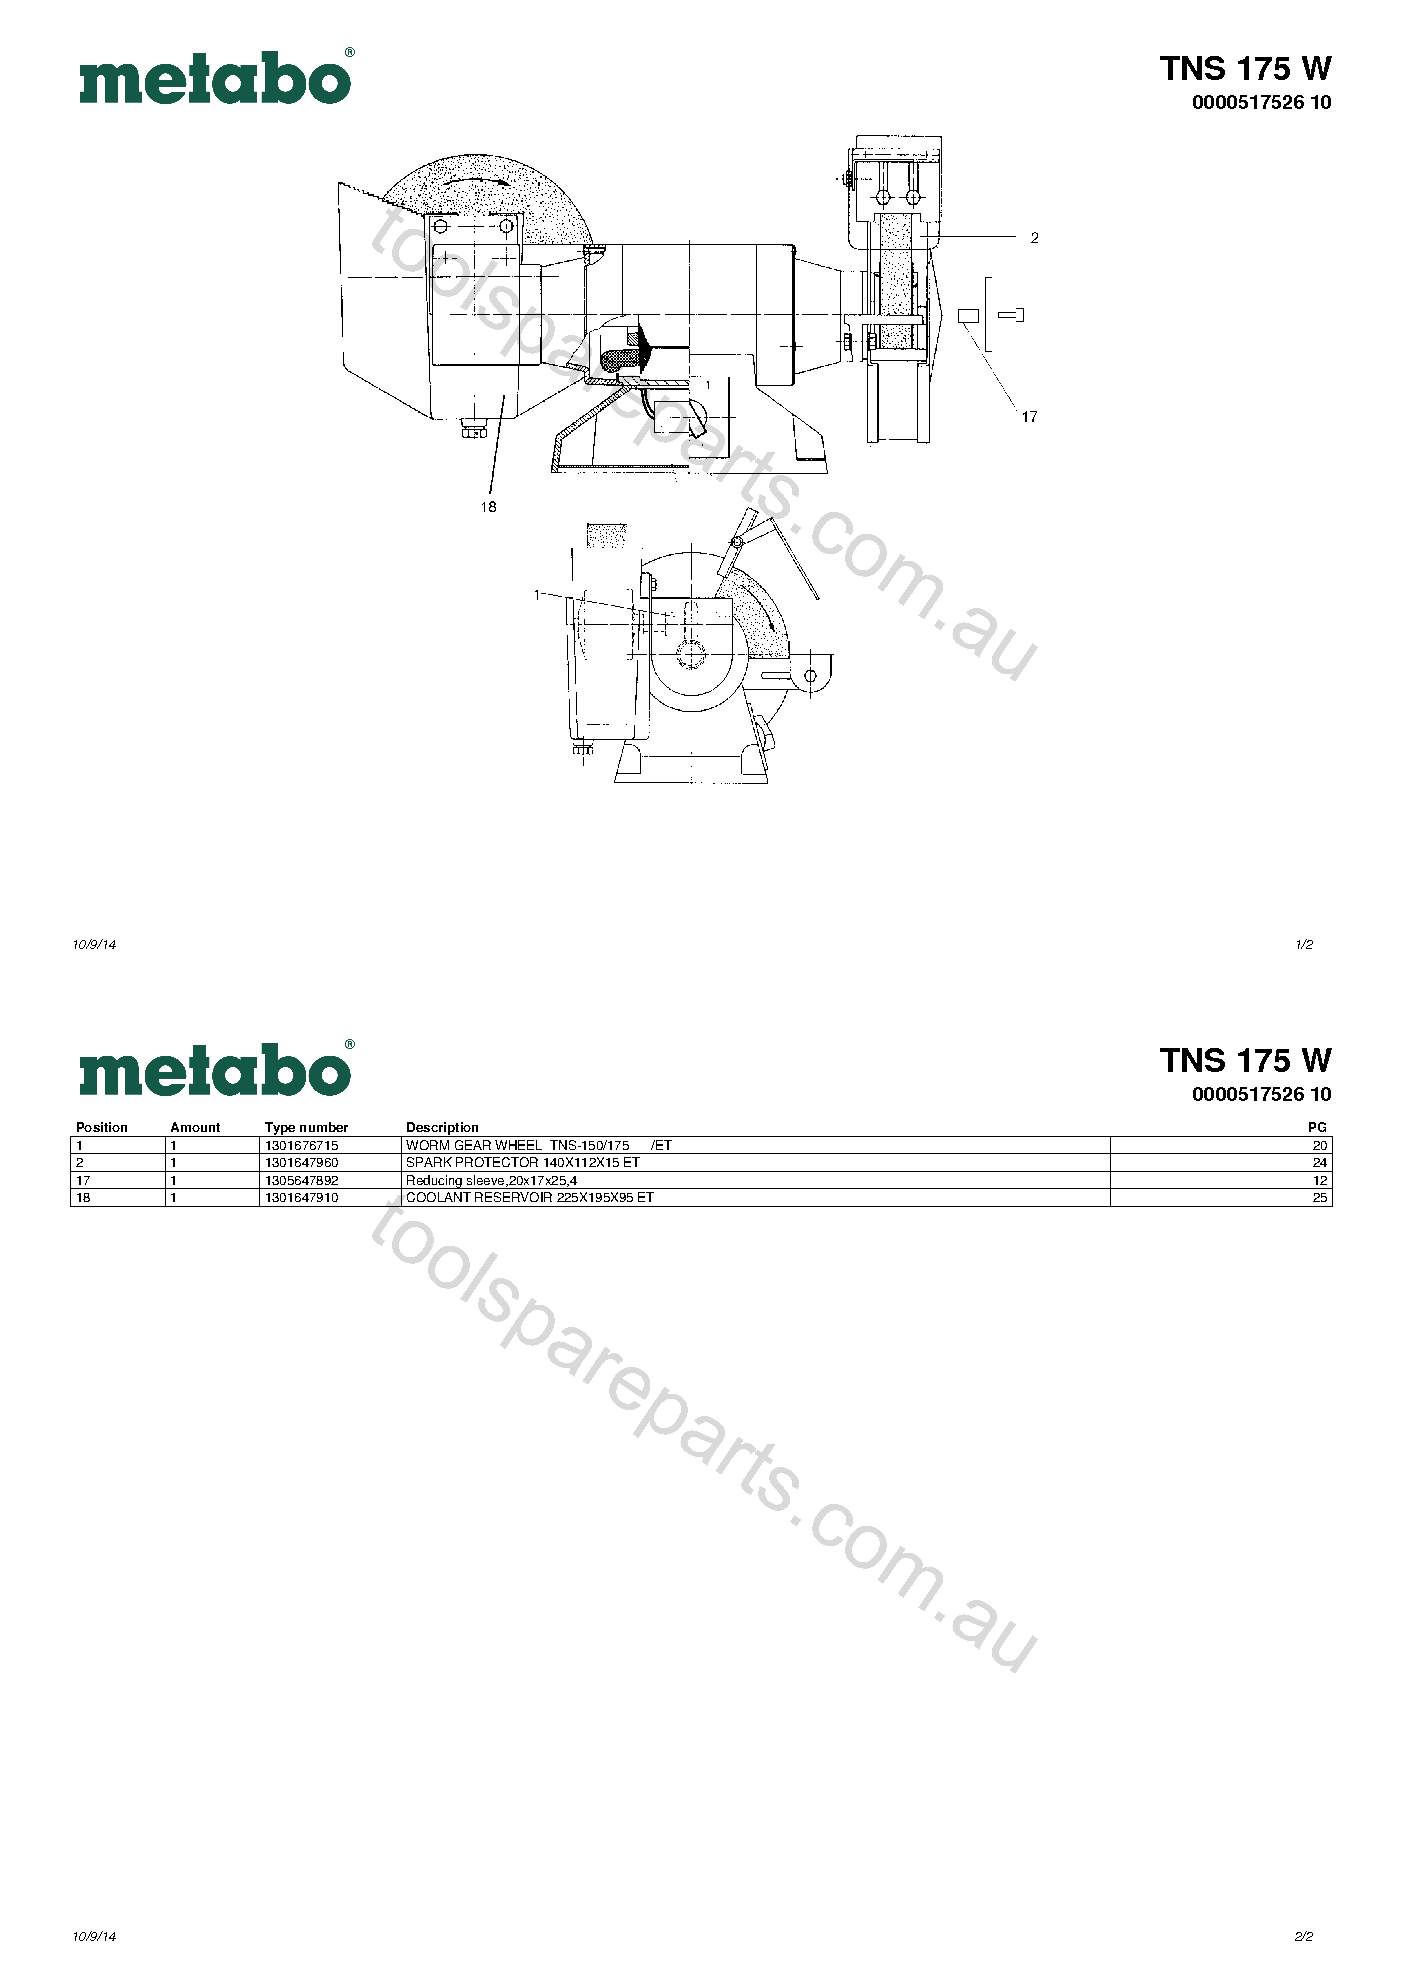 Metabo TNS 175 W 0000517526 10  Diagram 1